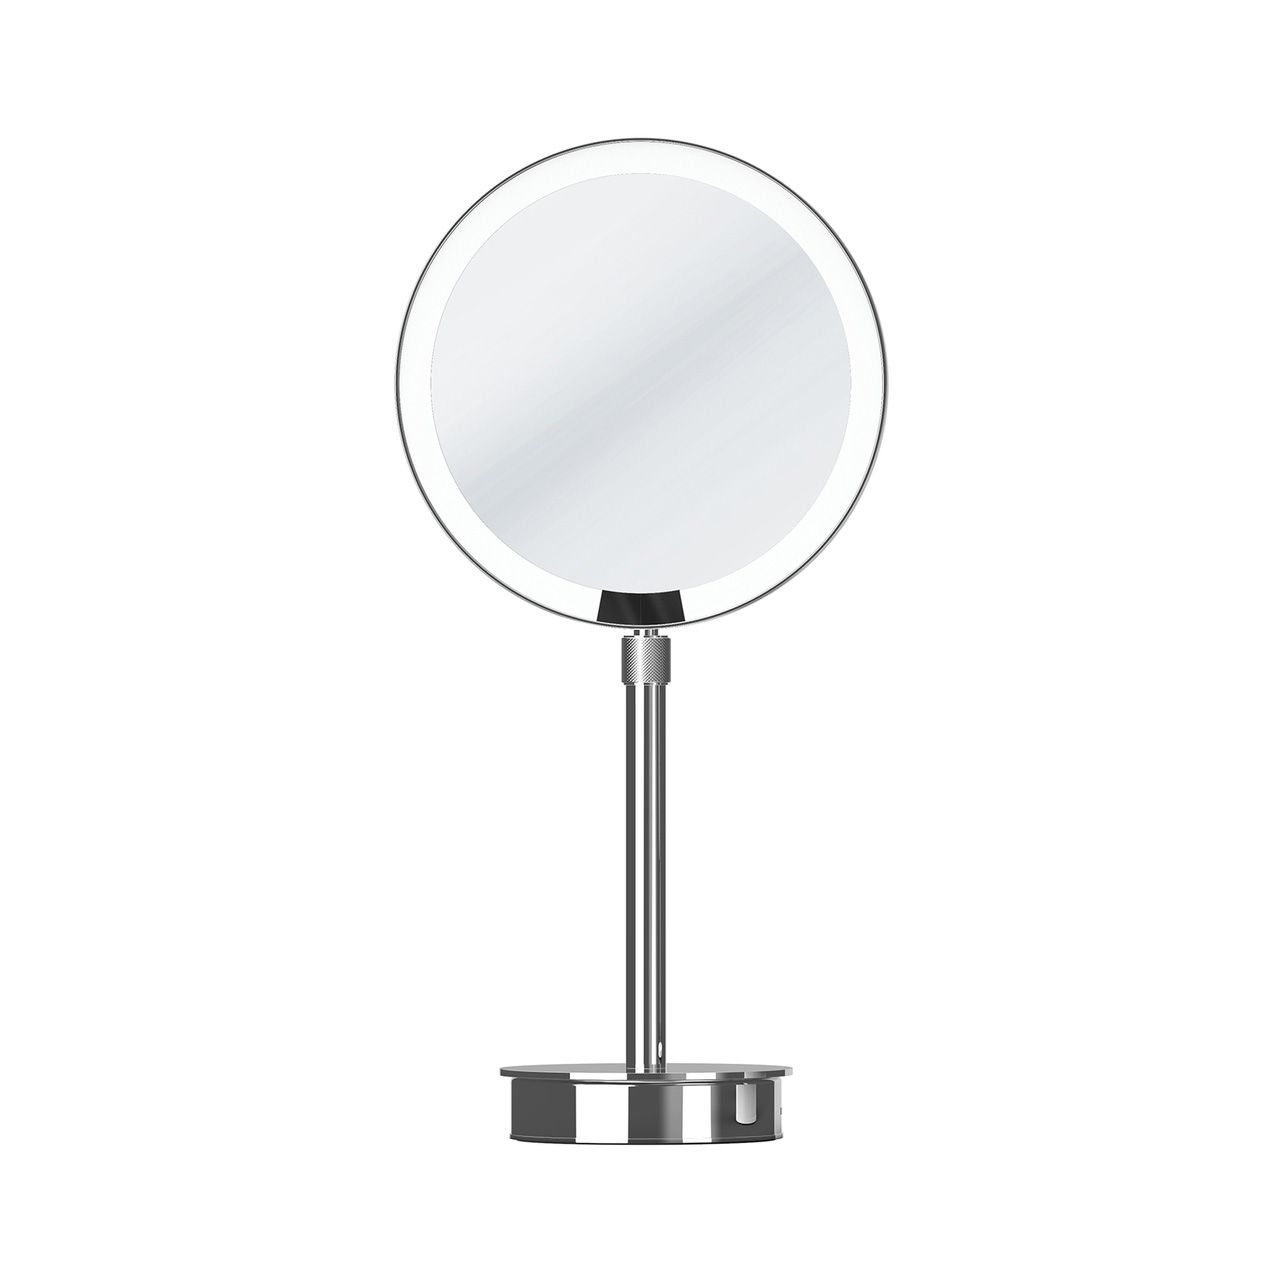 Sensor Magnifying Mirrors